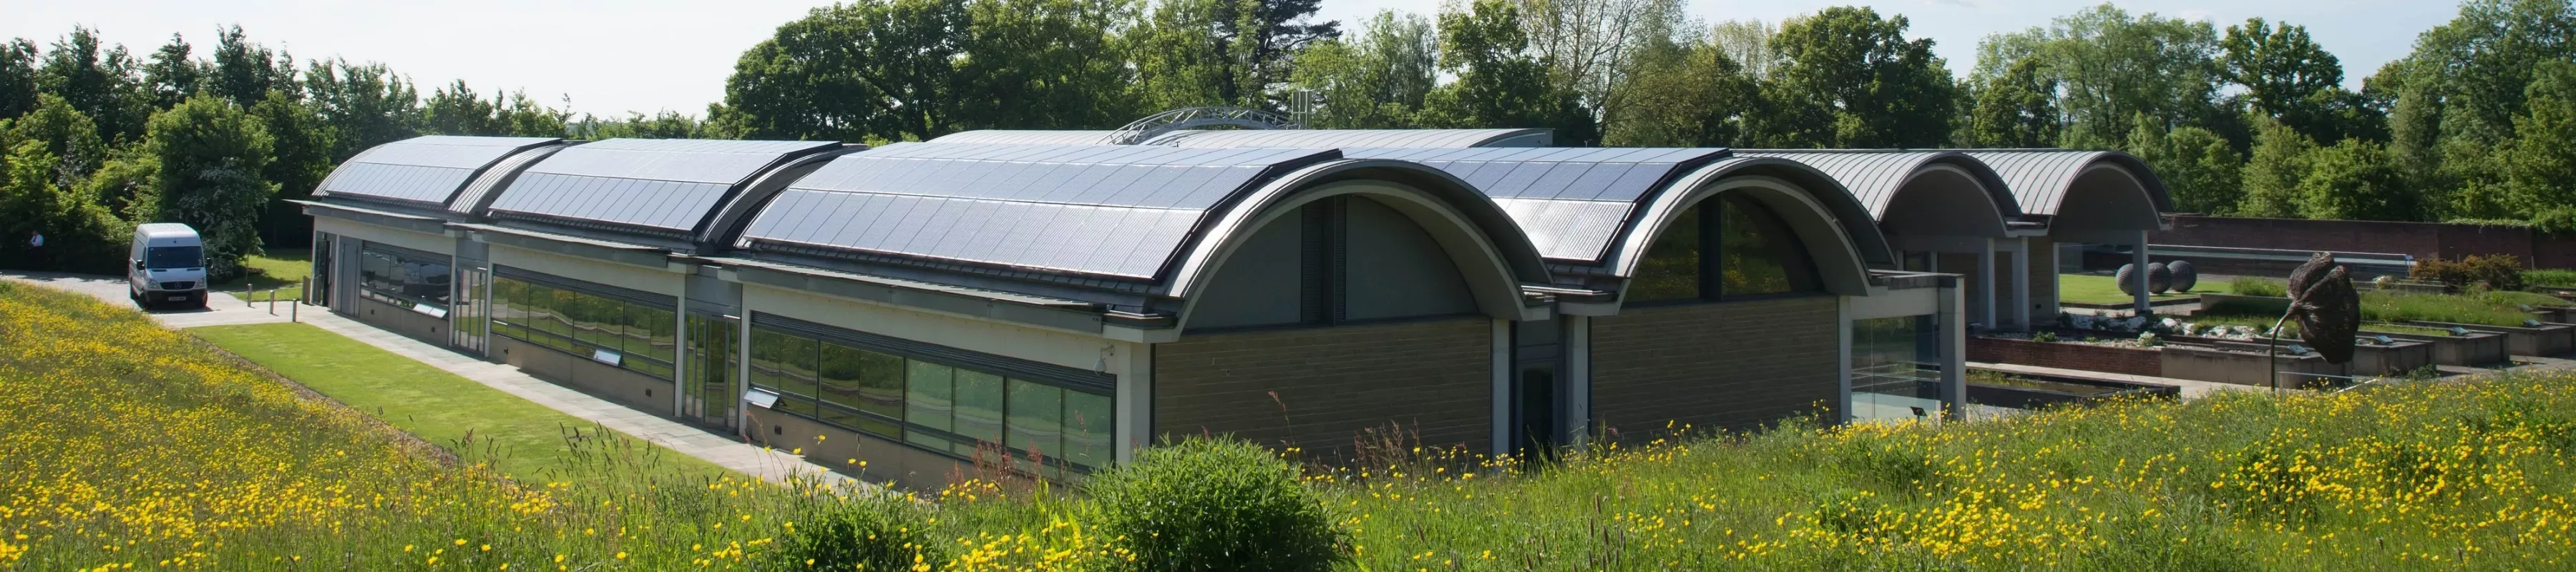 Millennium Seed Bank solar panels 